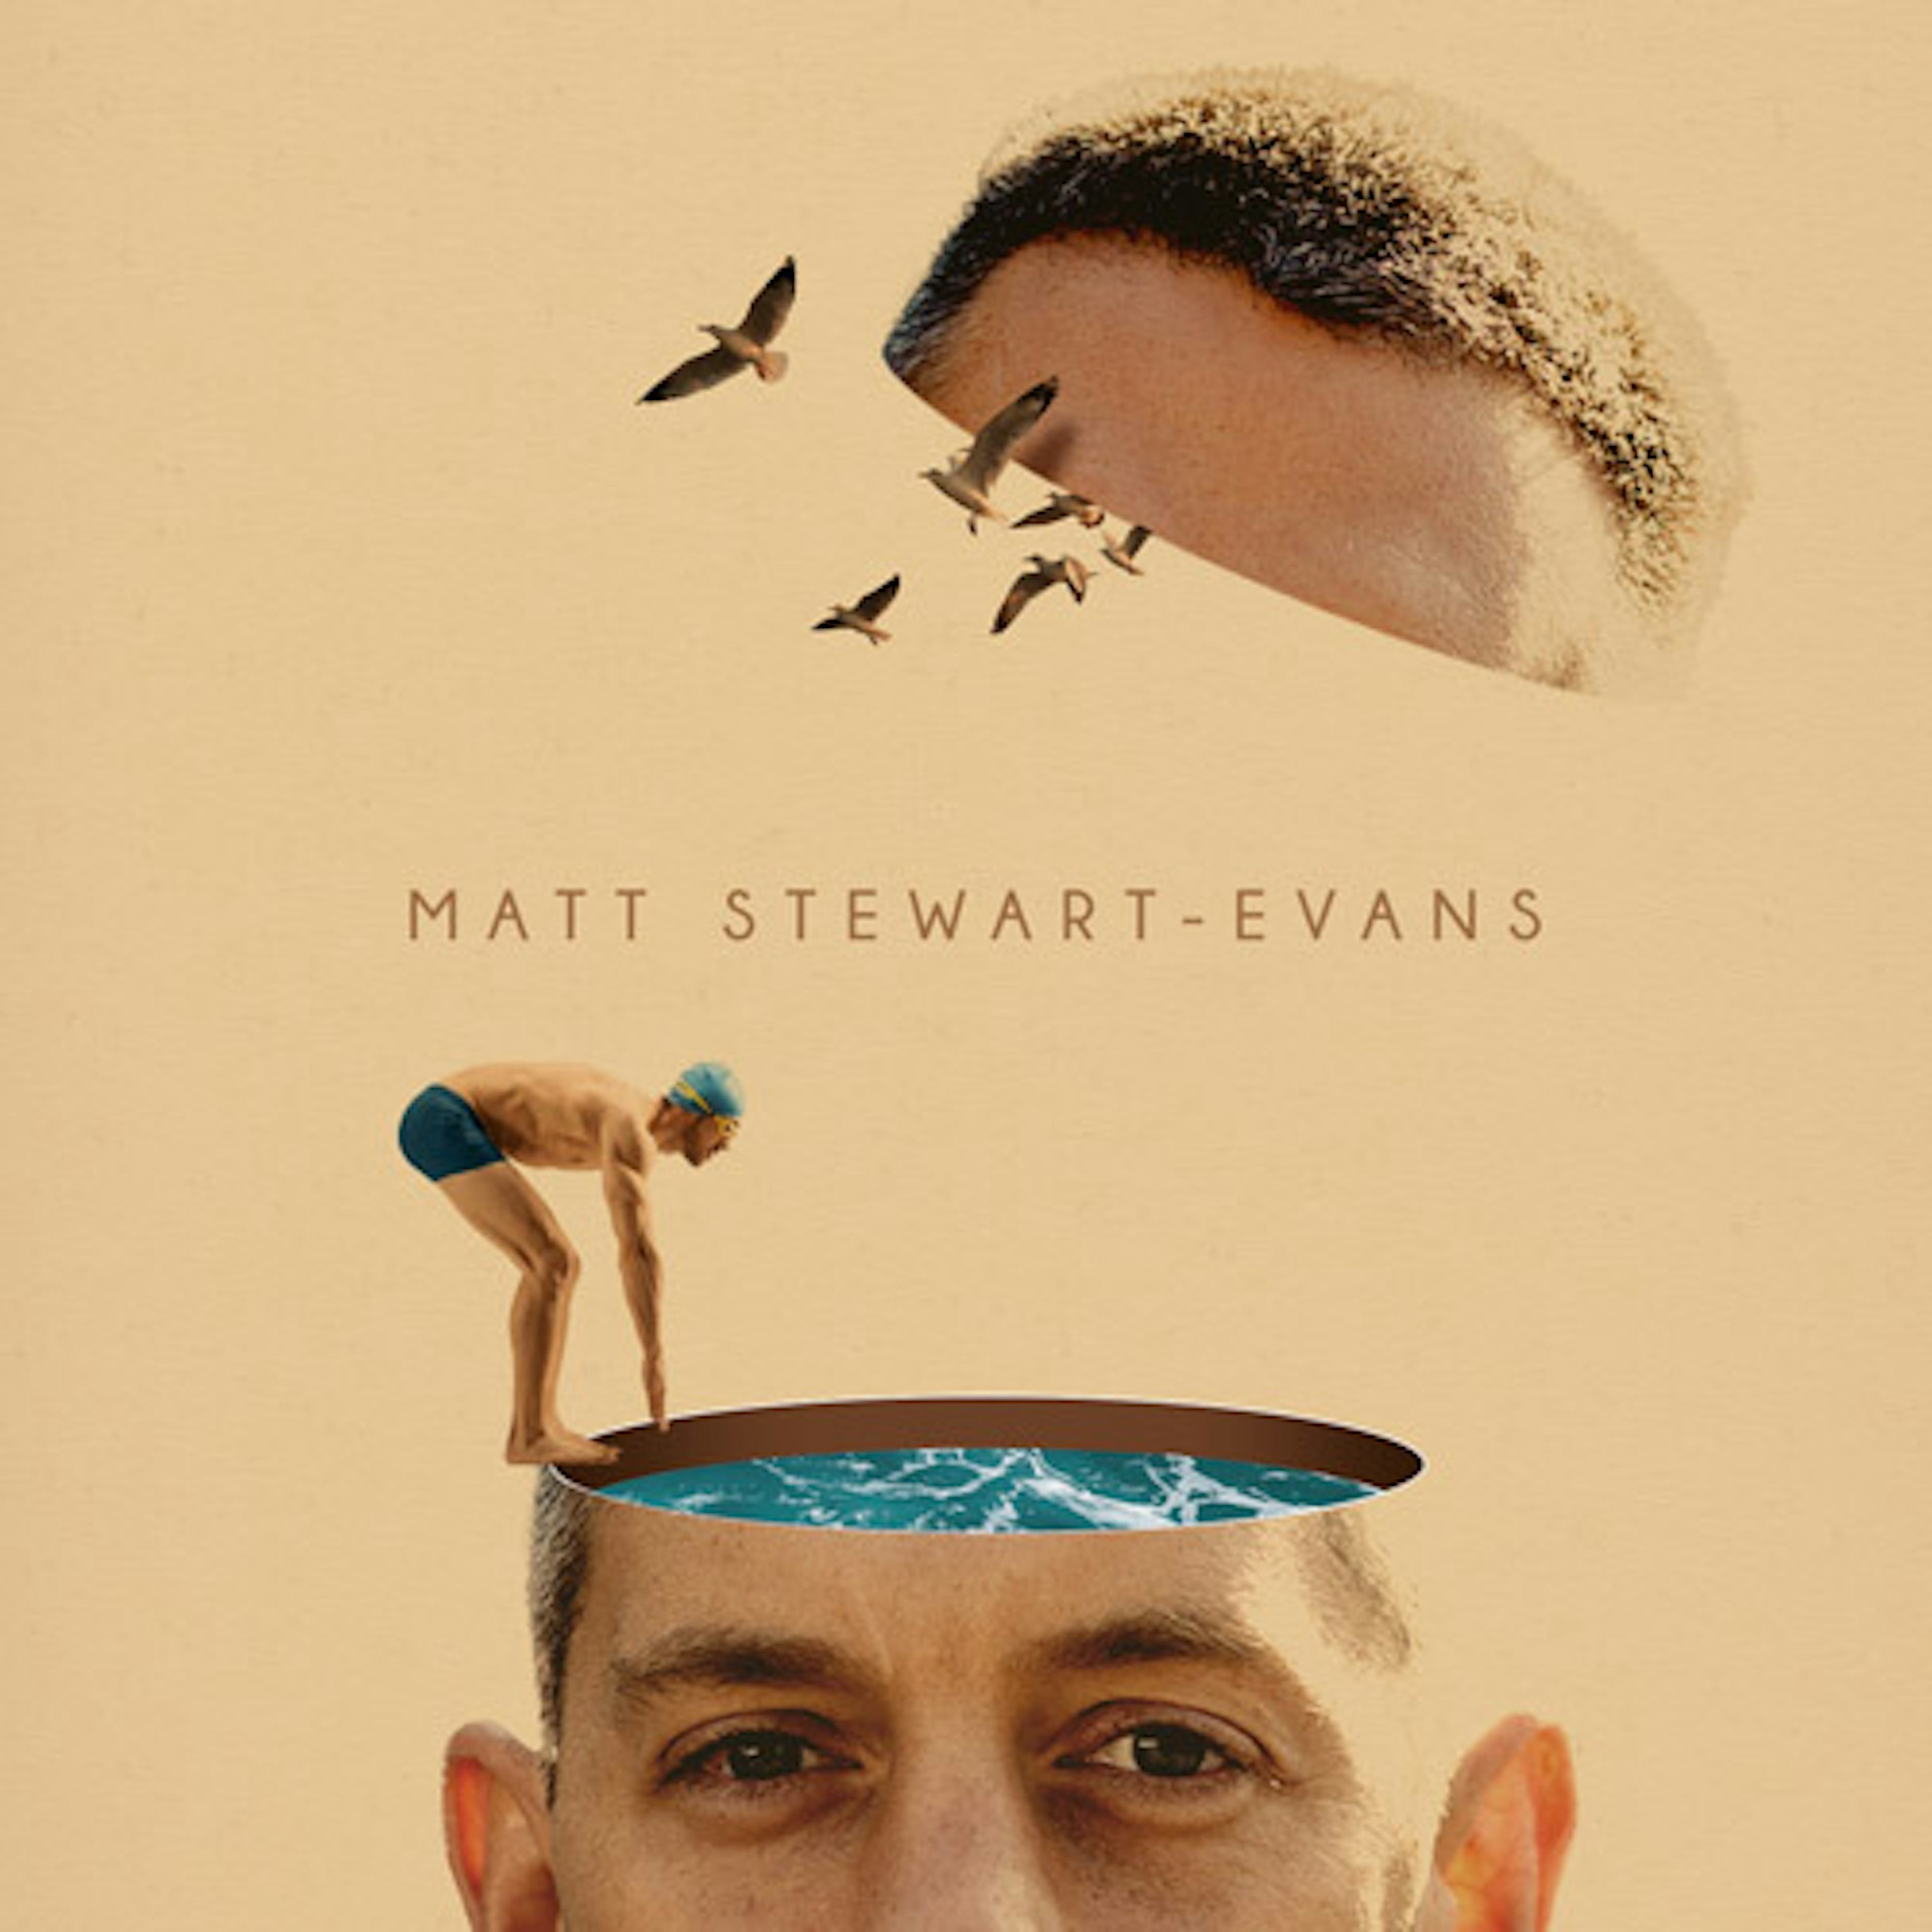 Matt Stewart-Evans artwork